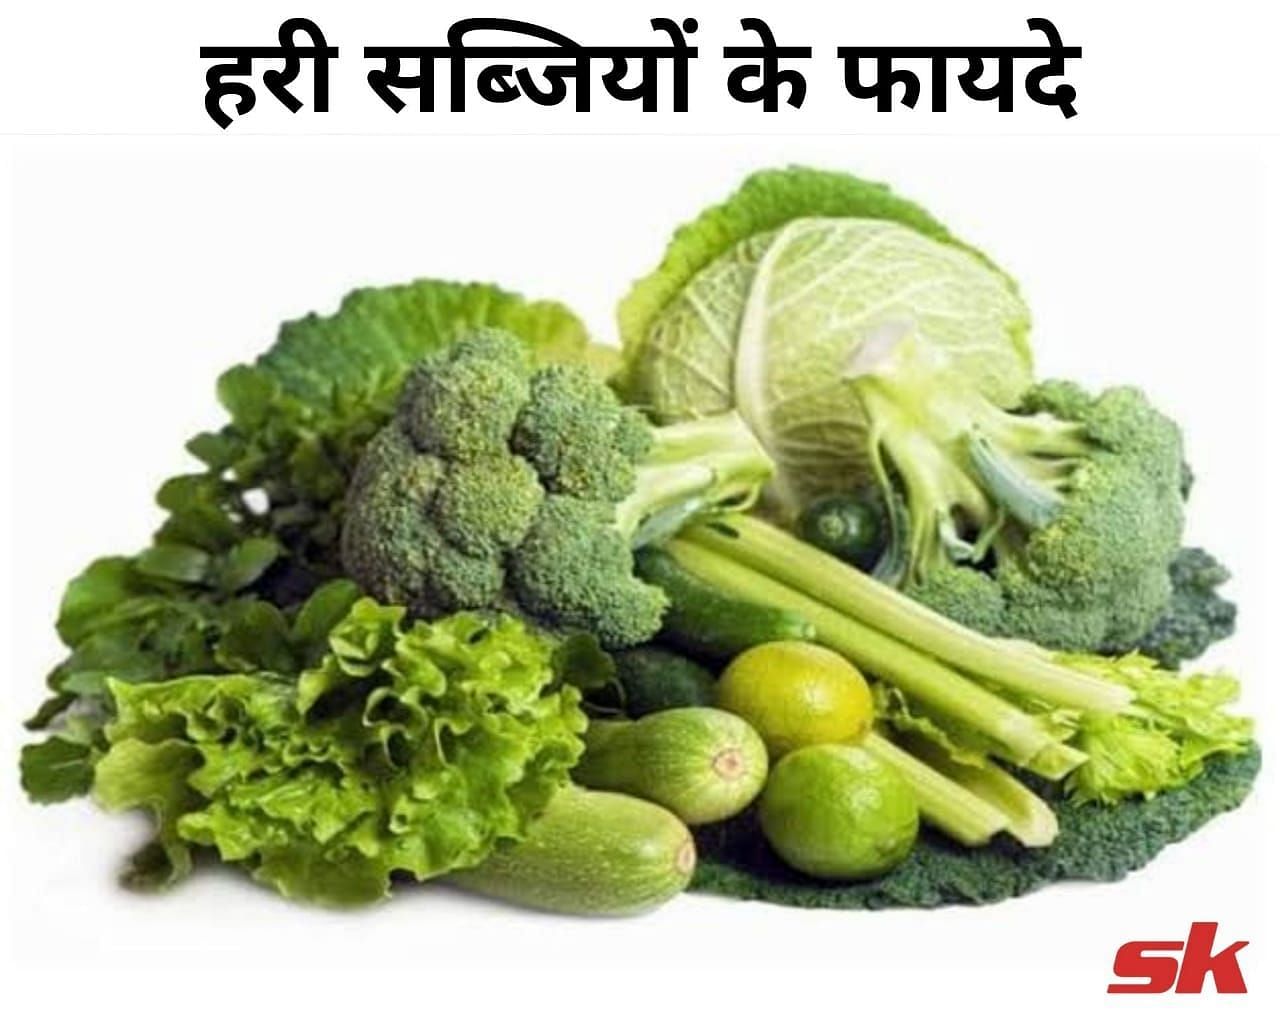 हरी सब्जियों के 3 फायदे (फोटो - sportskeedaहिन्दी)